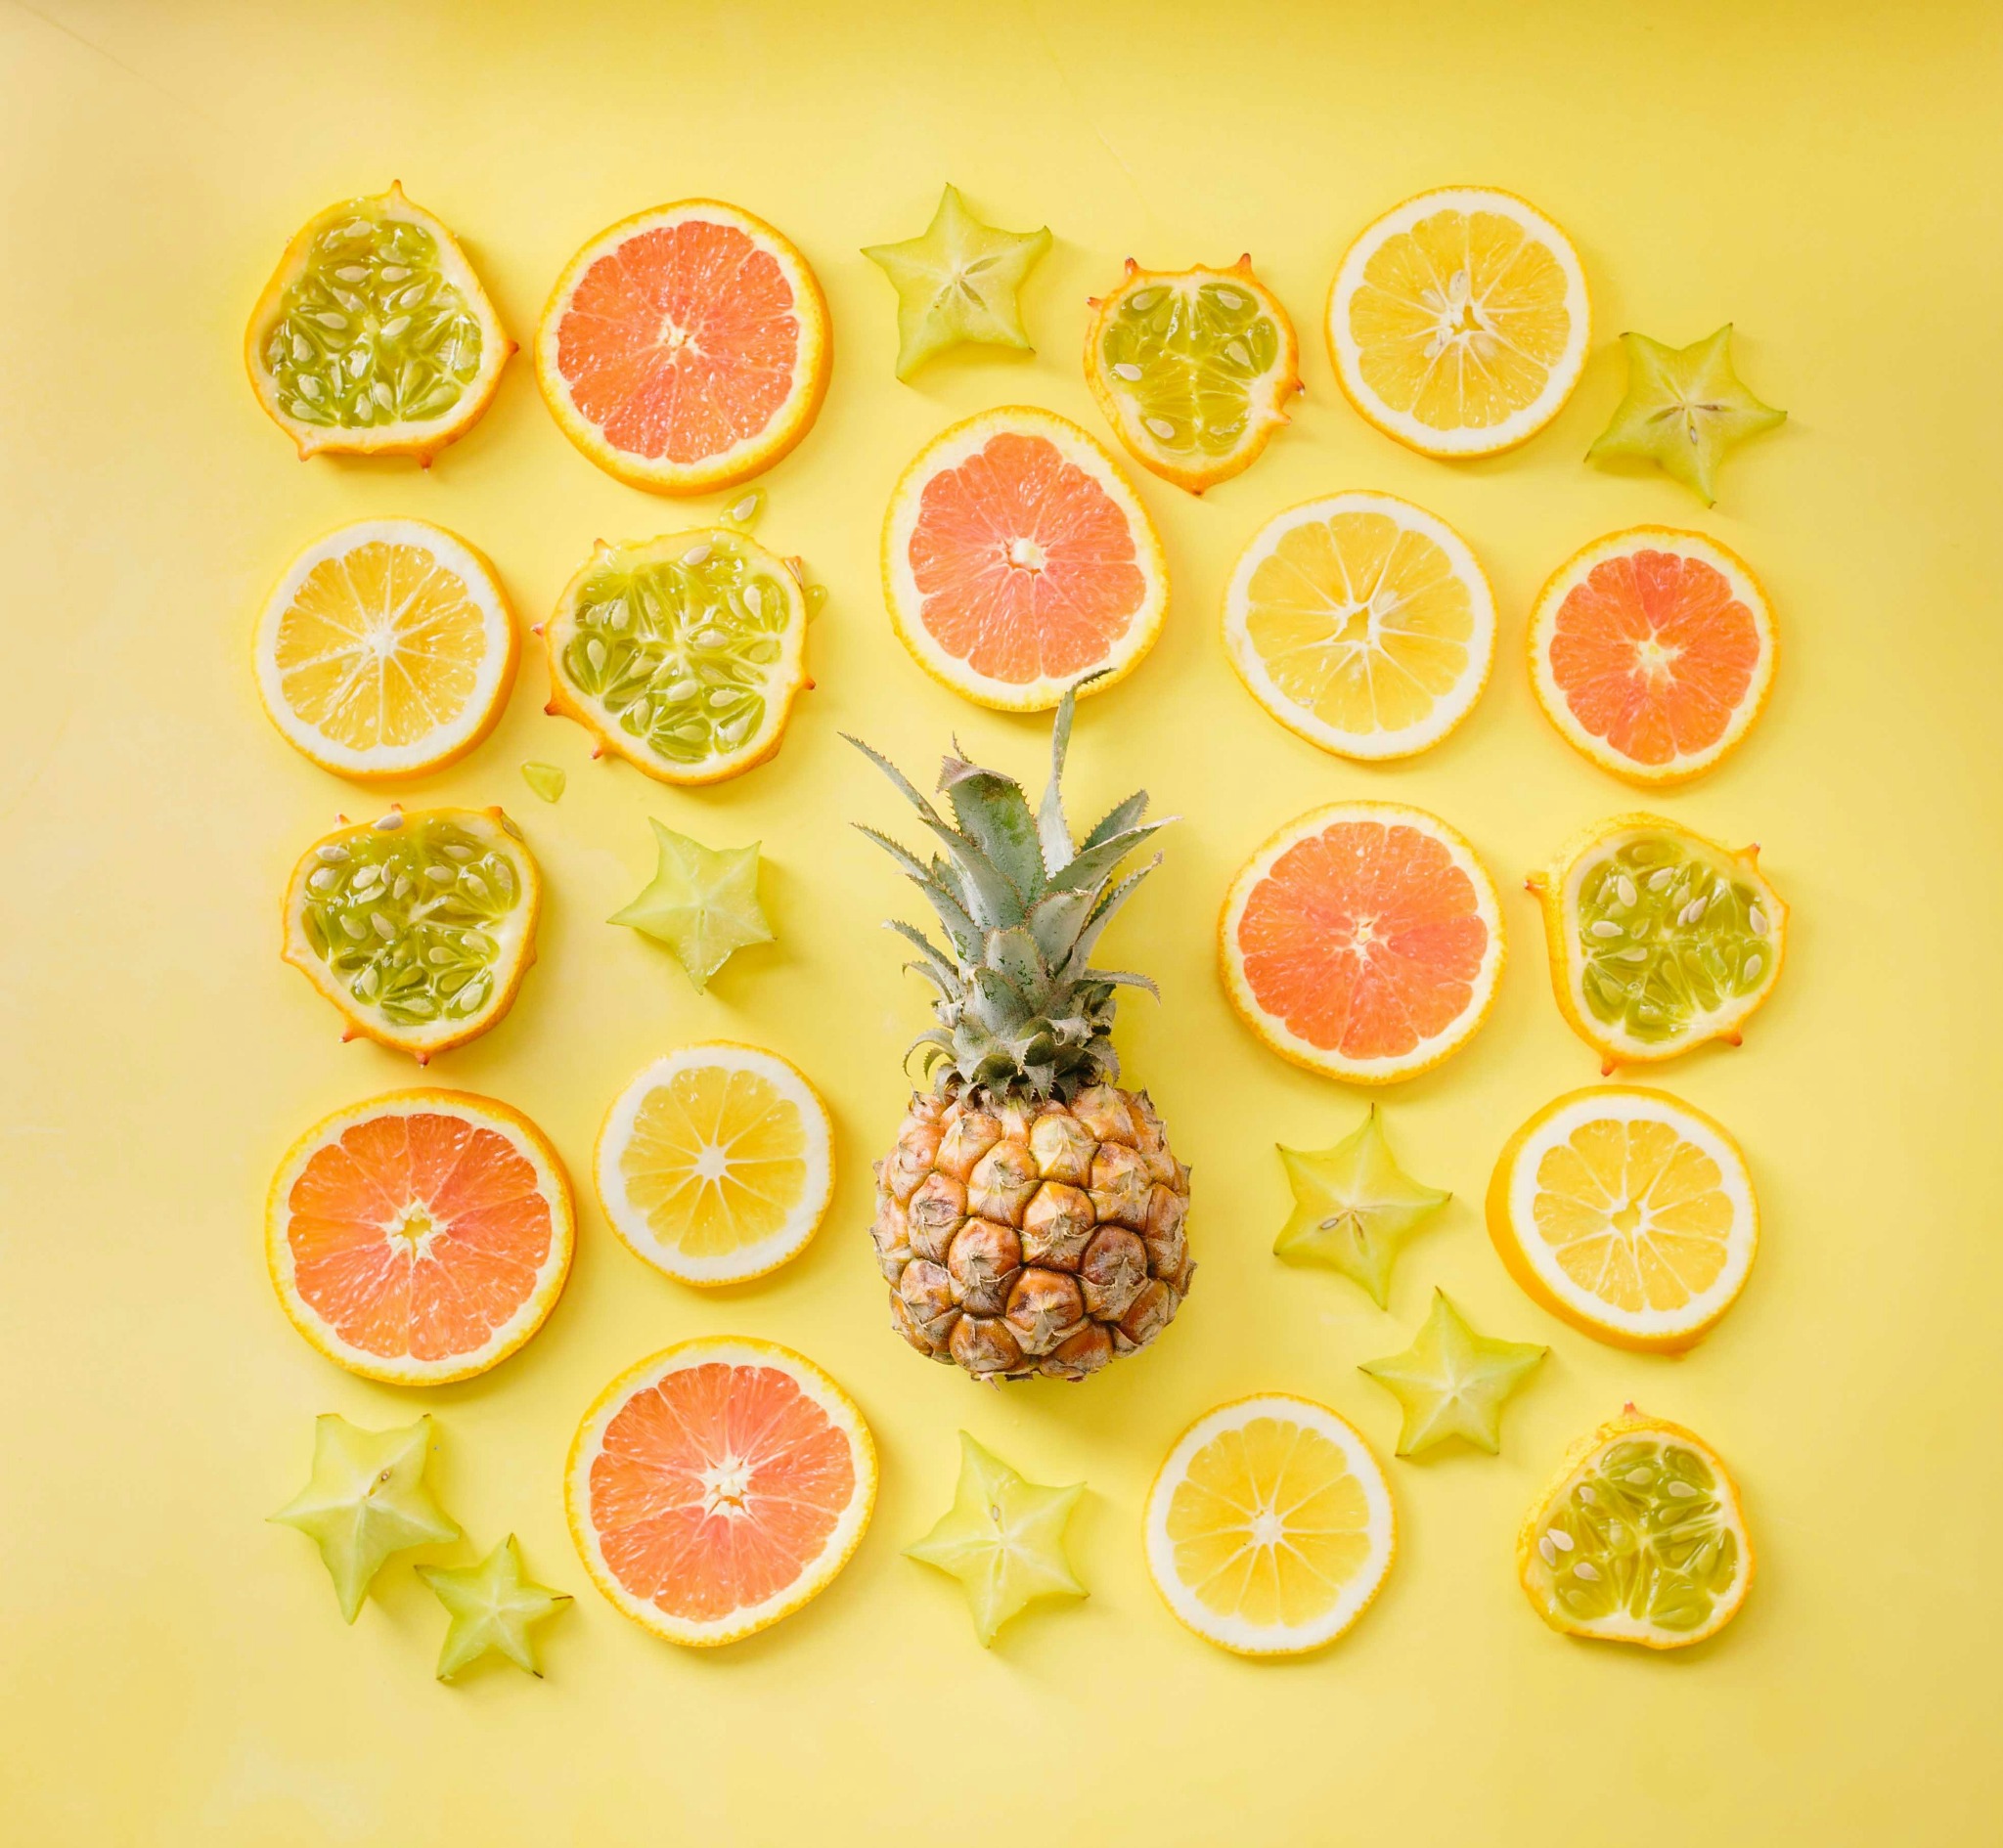 Artistic fruit arrangement pineapple